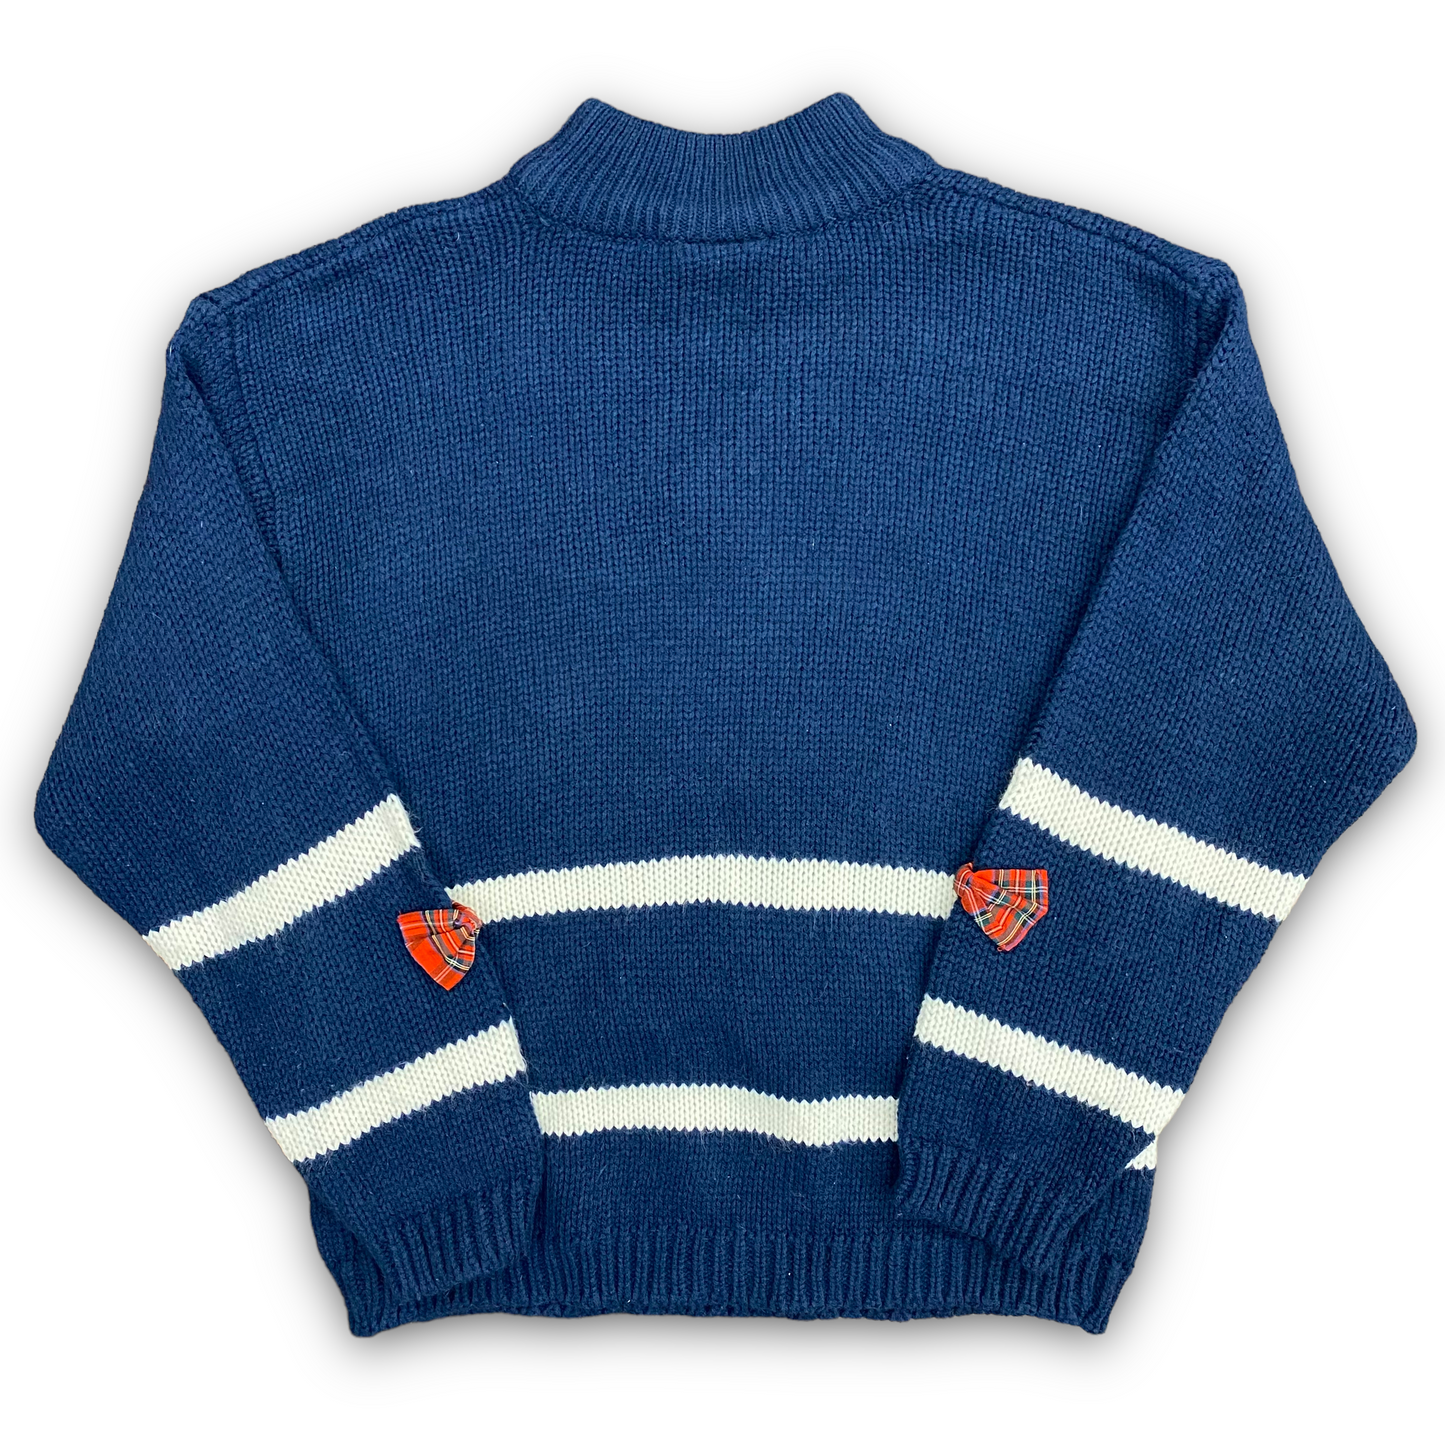 Vintage 1980s DEB Navy Blue Knit Dog & Bows Sweater - Size Large